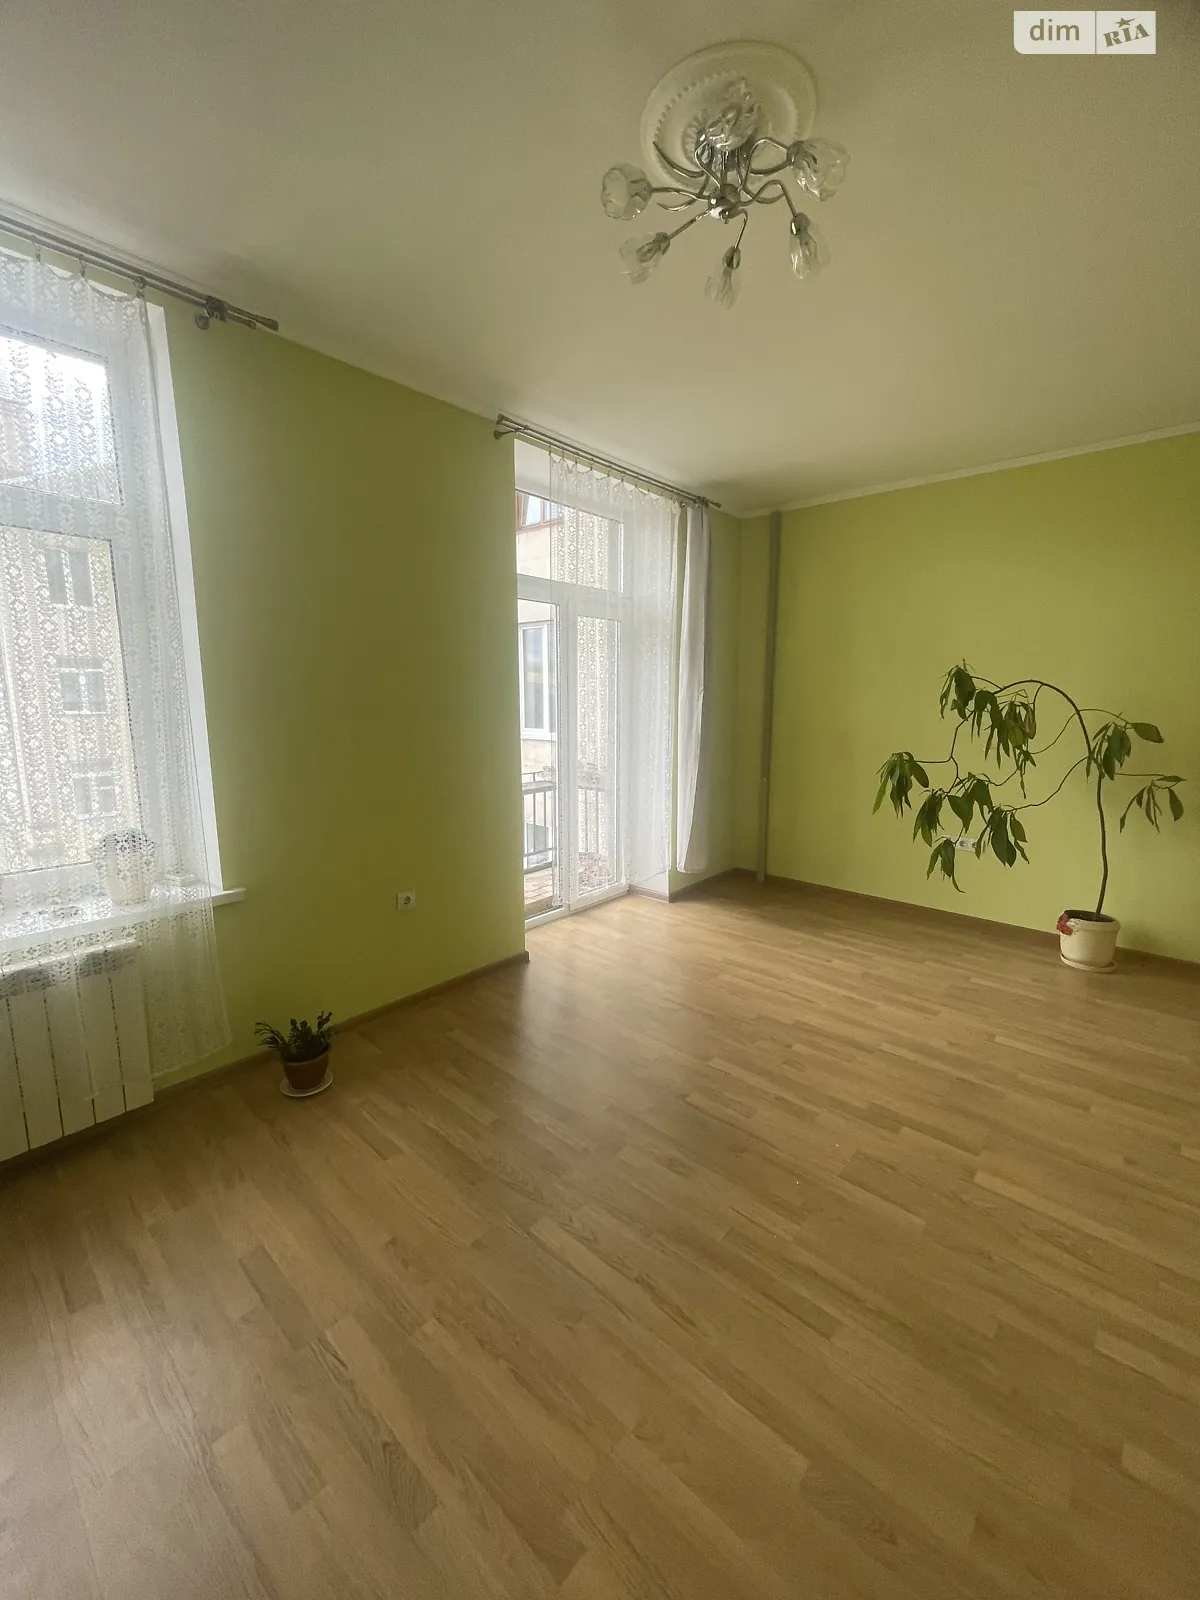 2-кімнатна квартира 52 кв. м у Тернополі, цена: 47000 $ - фото 1